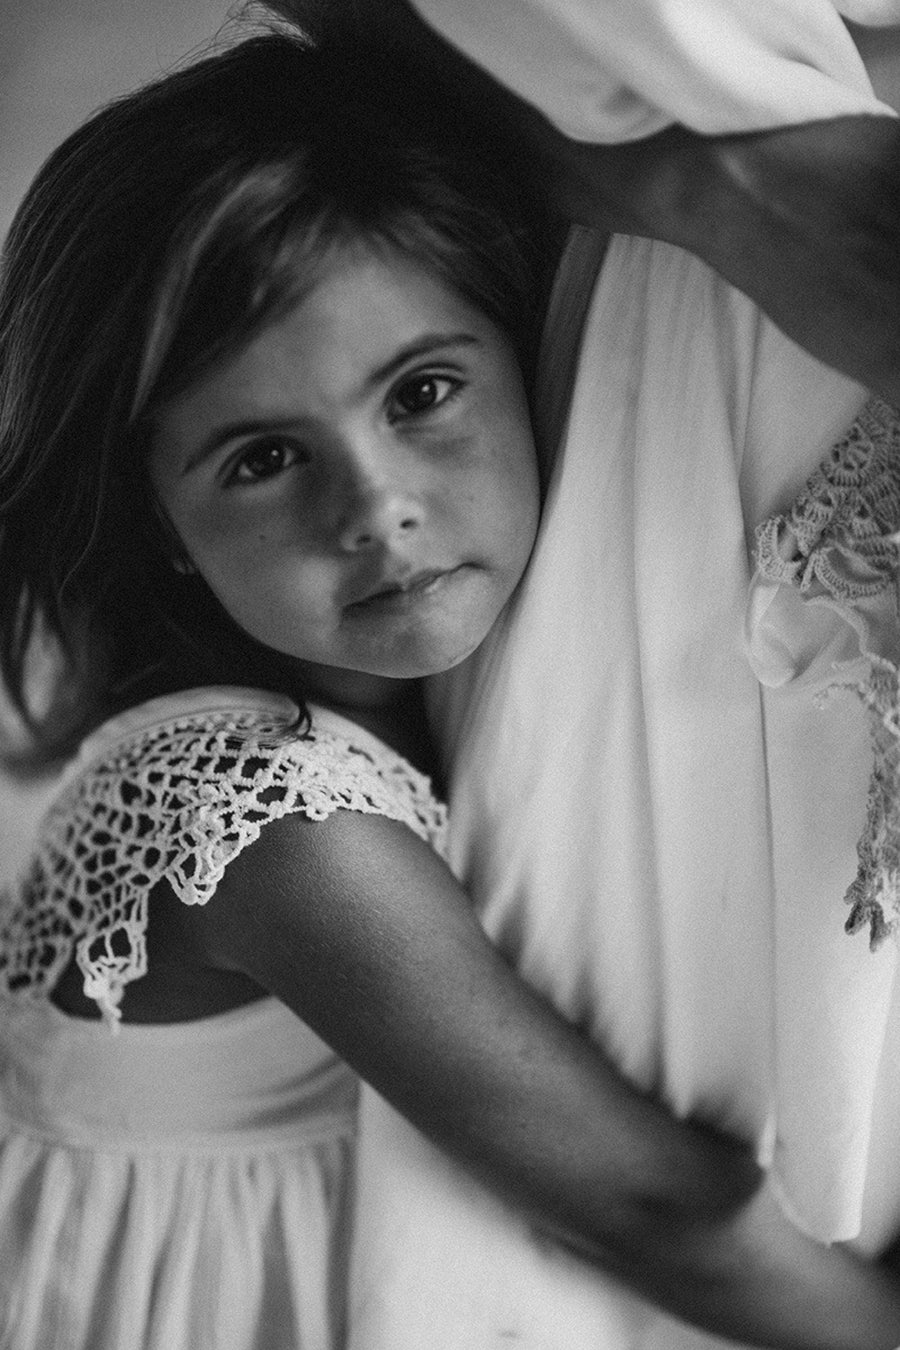 Ivory Flower Girl | Photoshoot Dress Boho | White Lace Flower Girl Dress  |  Flower Girl Dress Ivory or White |   Junior Bridesmaid | Made in Maui Hawaii